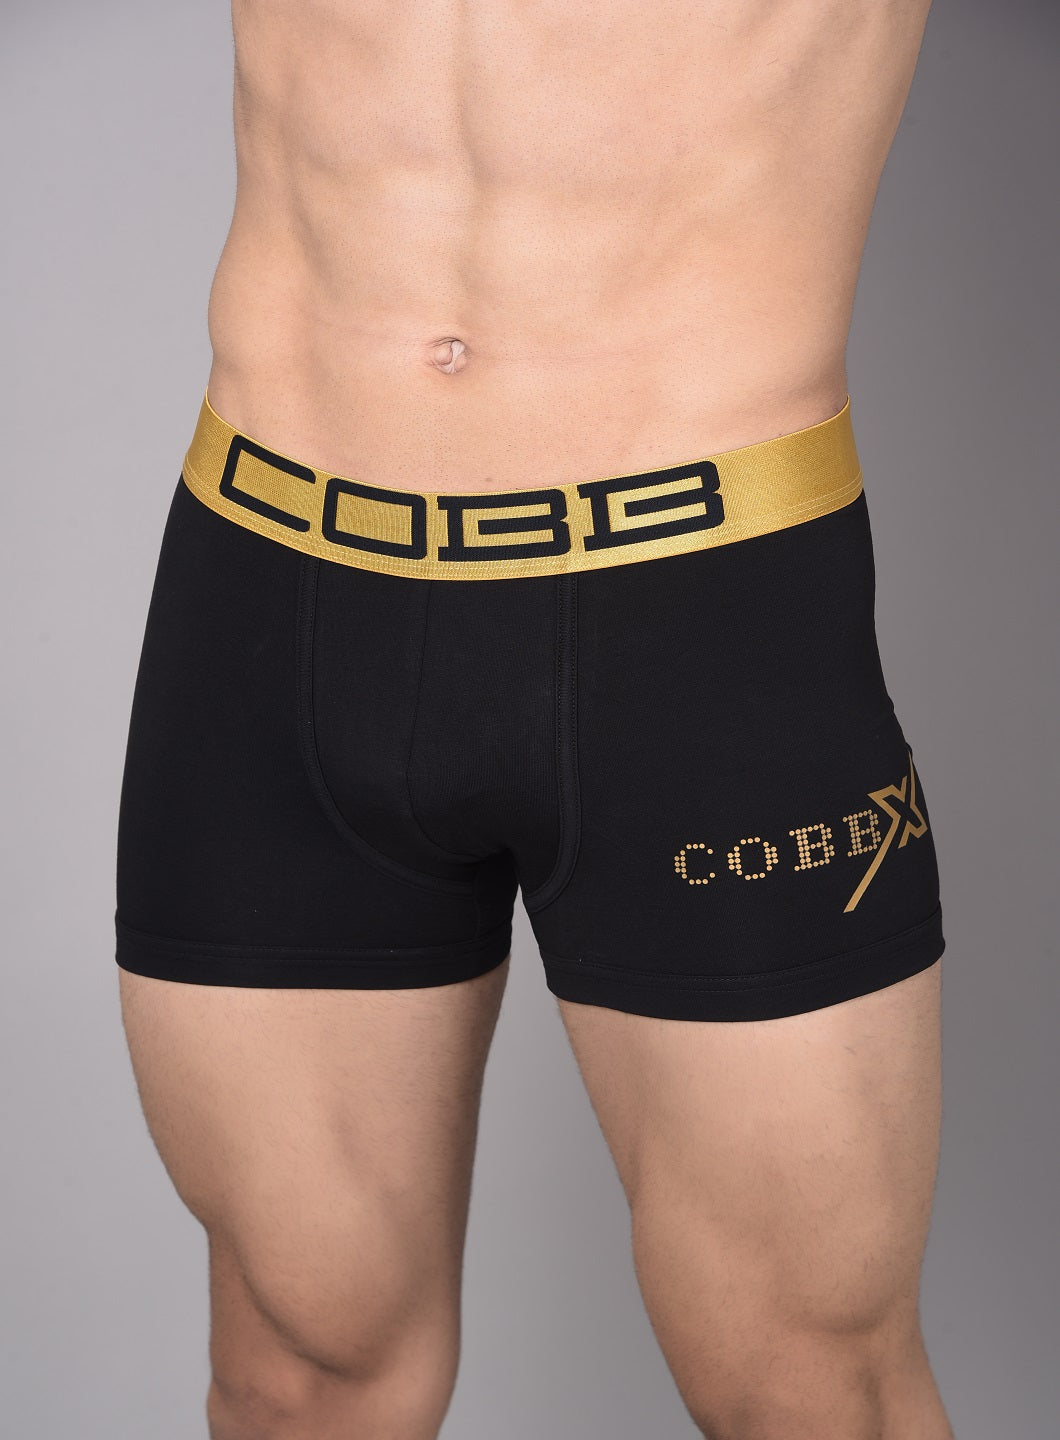 Cobb Mens Cotton Assorted Printed Premium Trunk (Pack of 2)